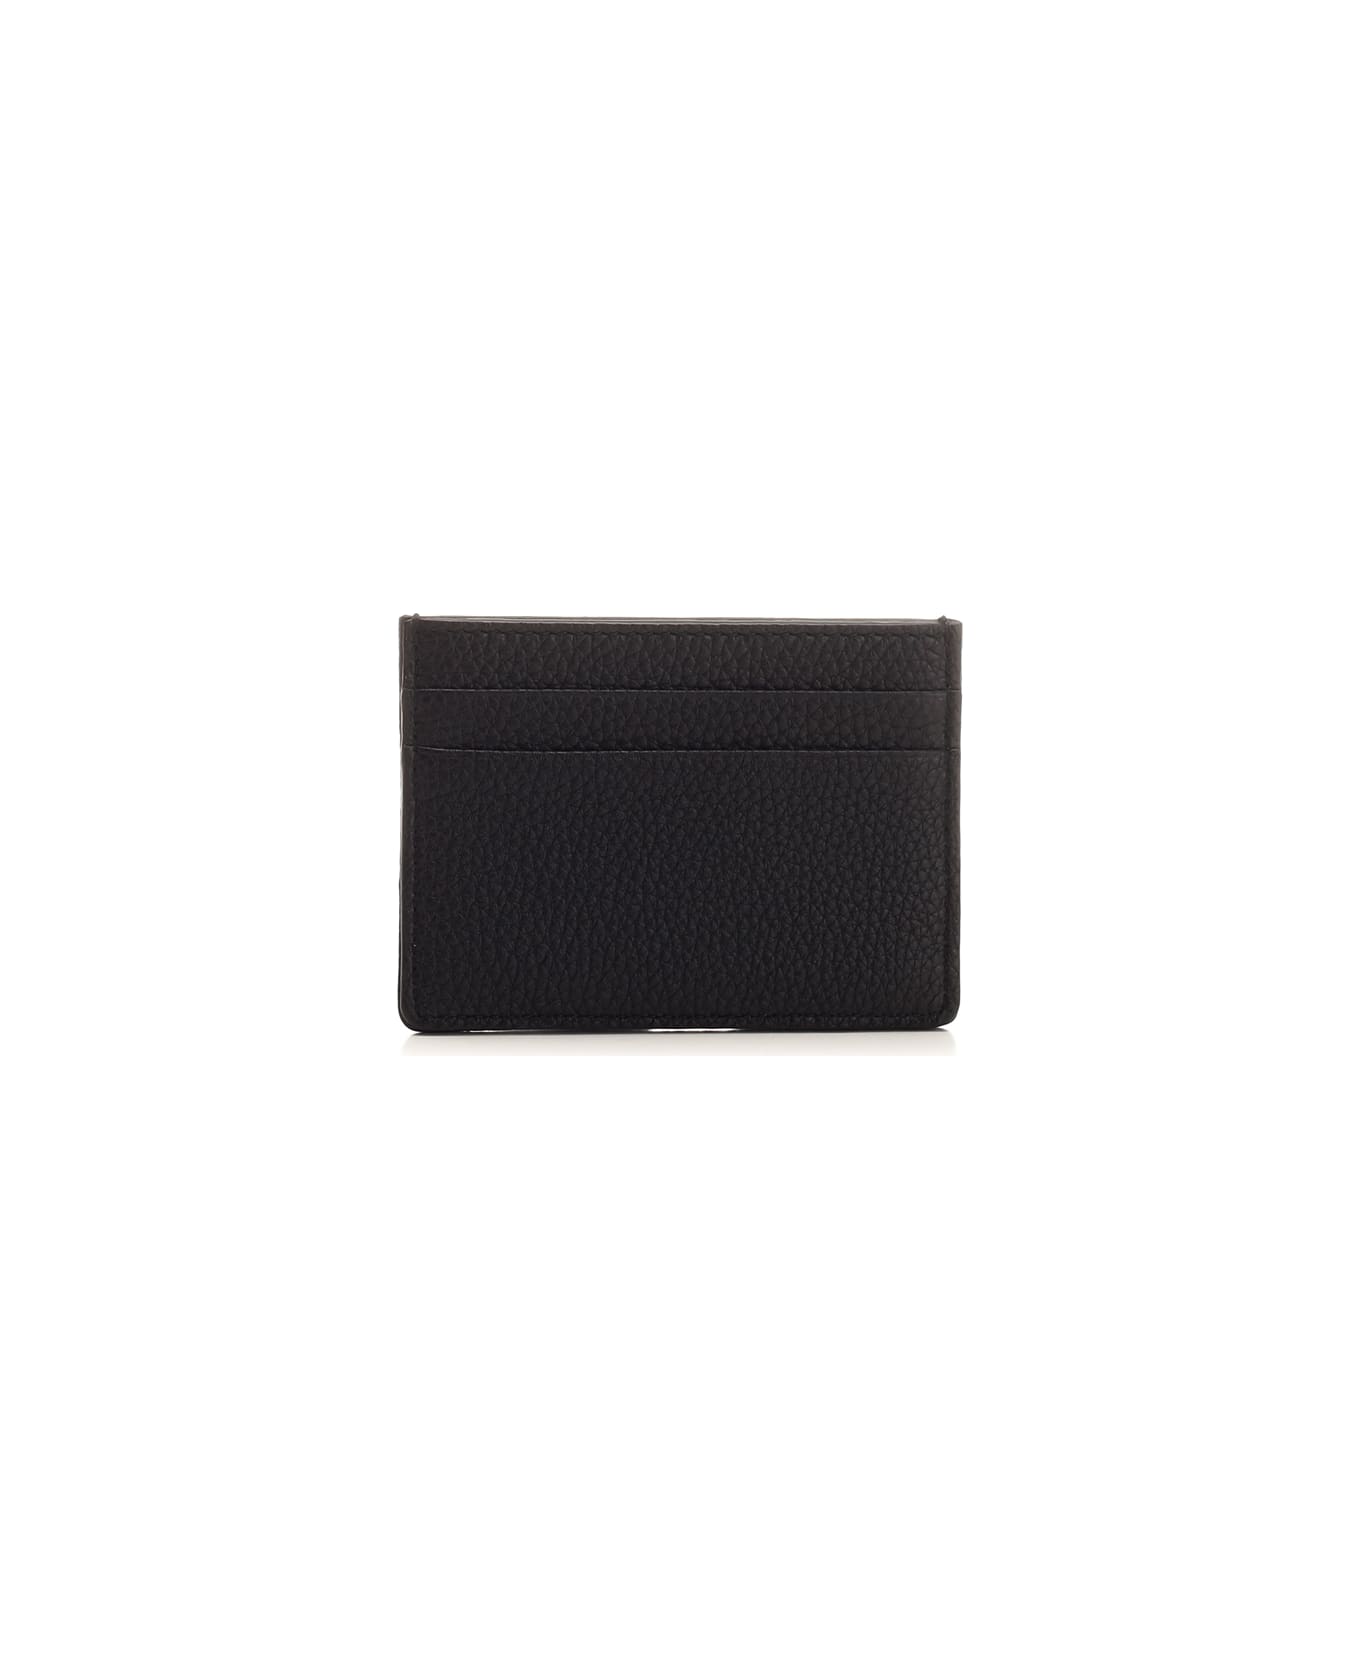 Valentino Garavani Leather Card Holder - Black